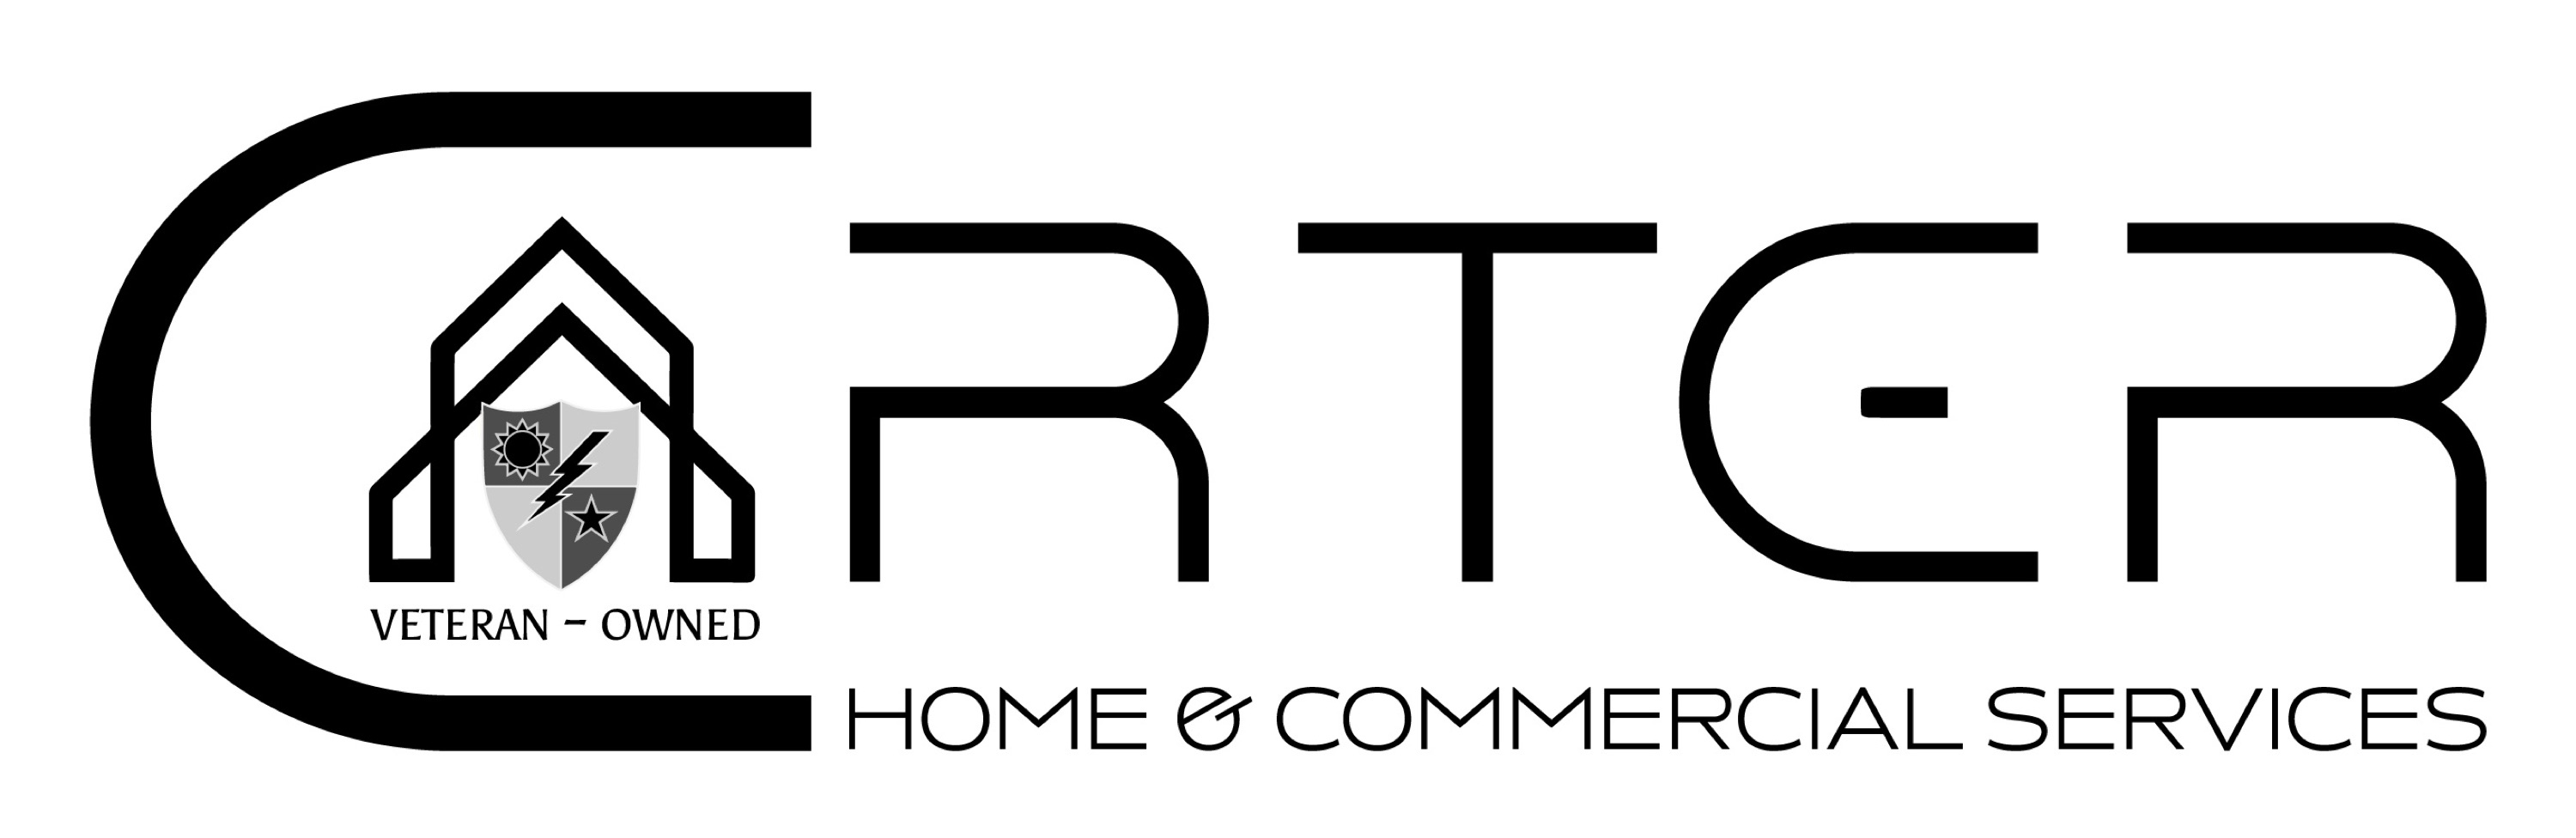 Carter Home & Commercial Services, LLC Logo